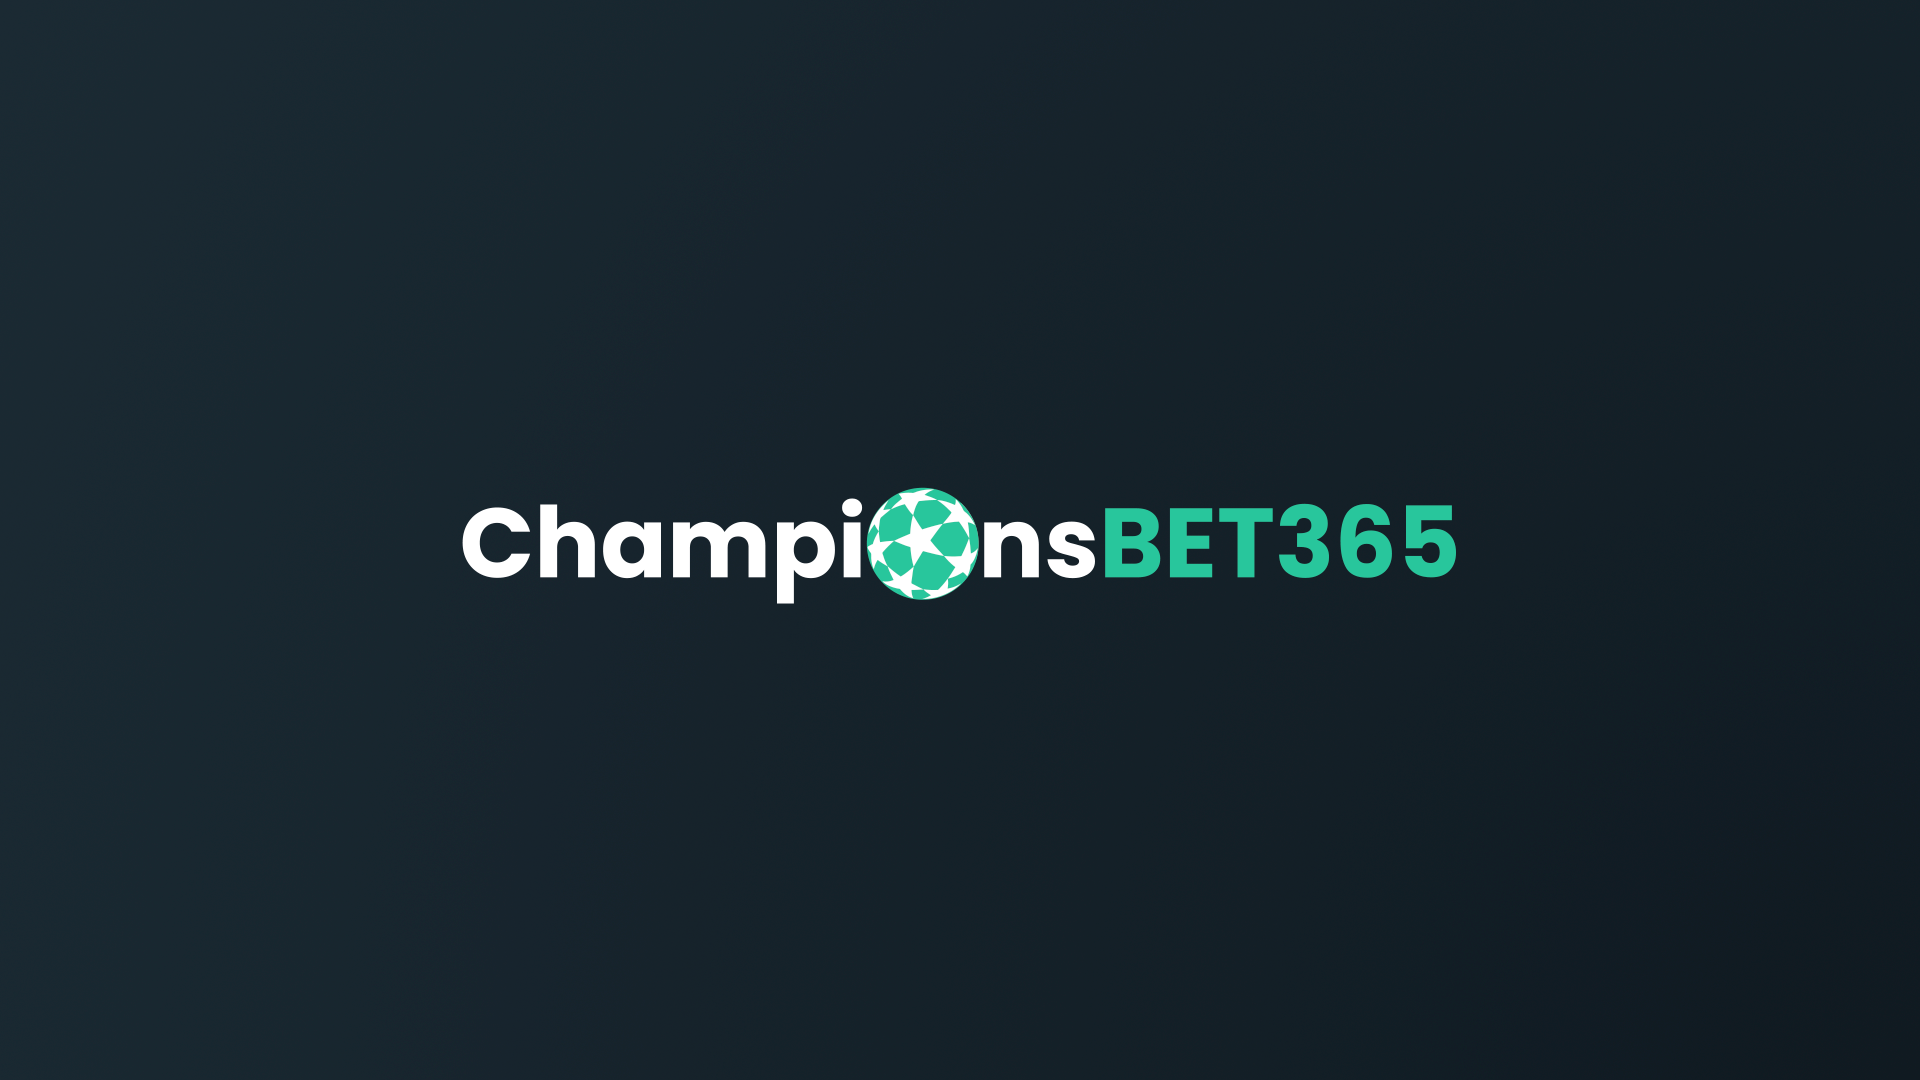 ChampionsBet365 Background